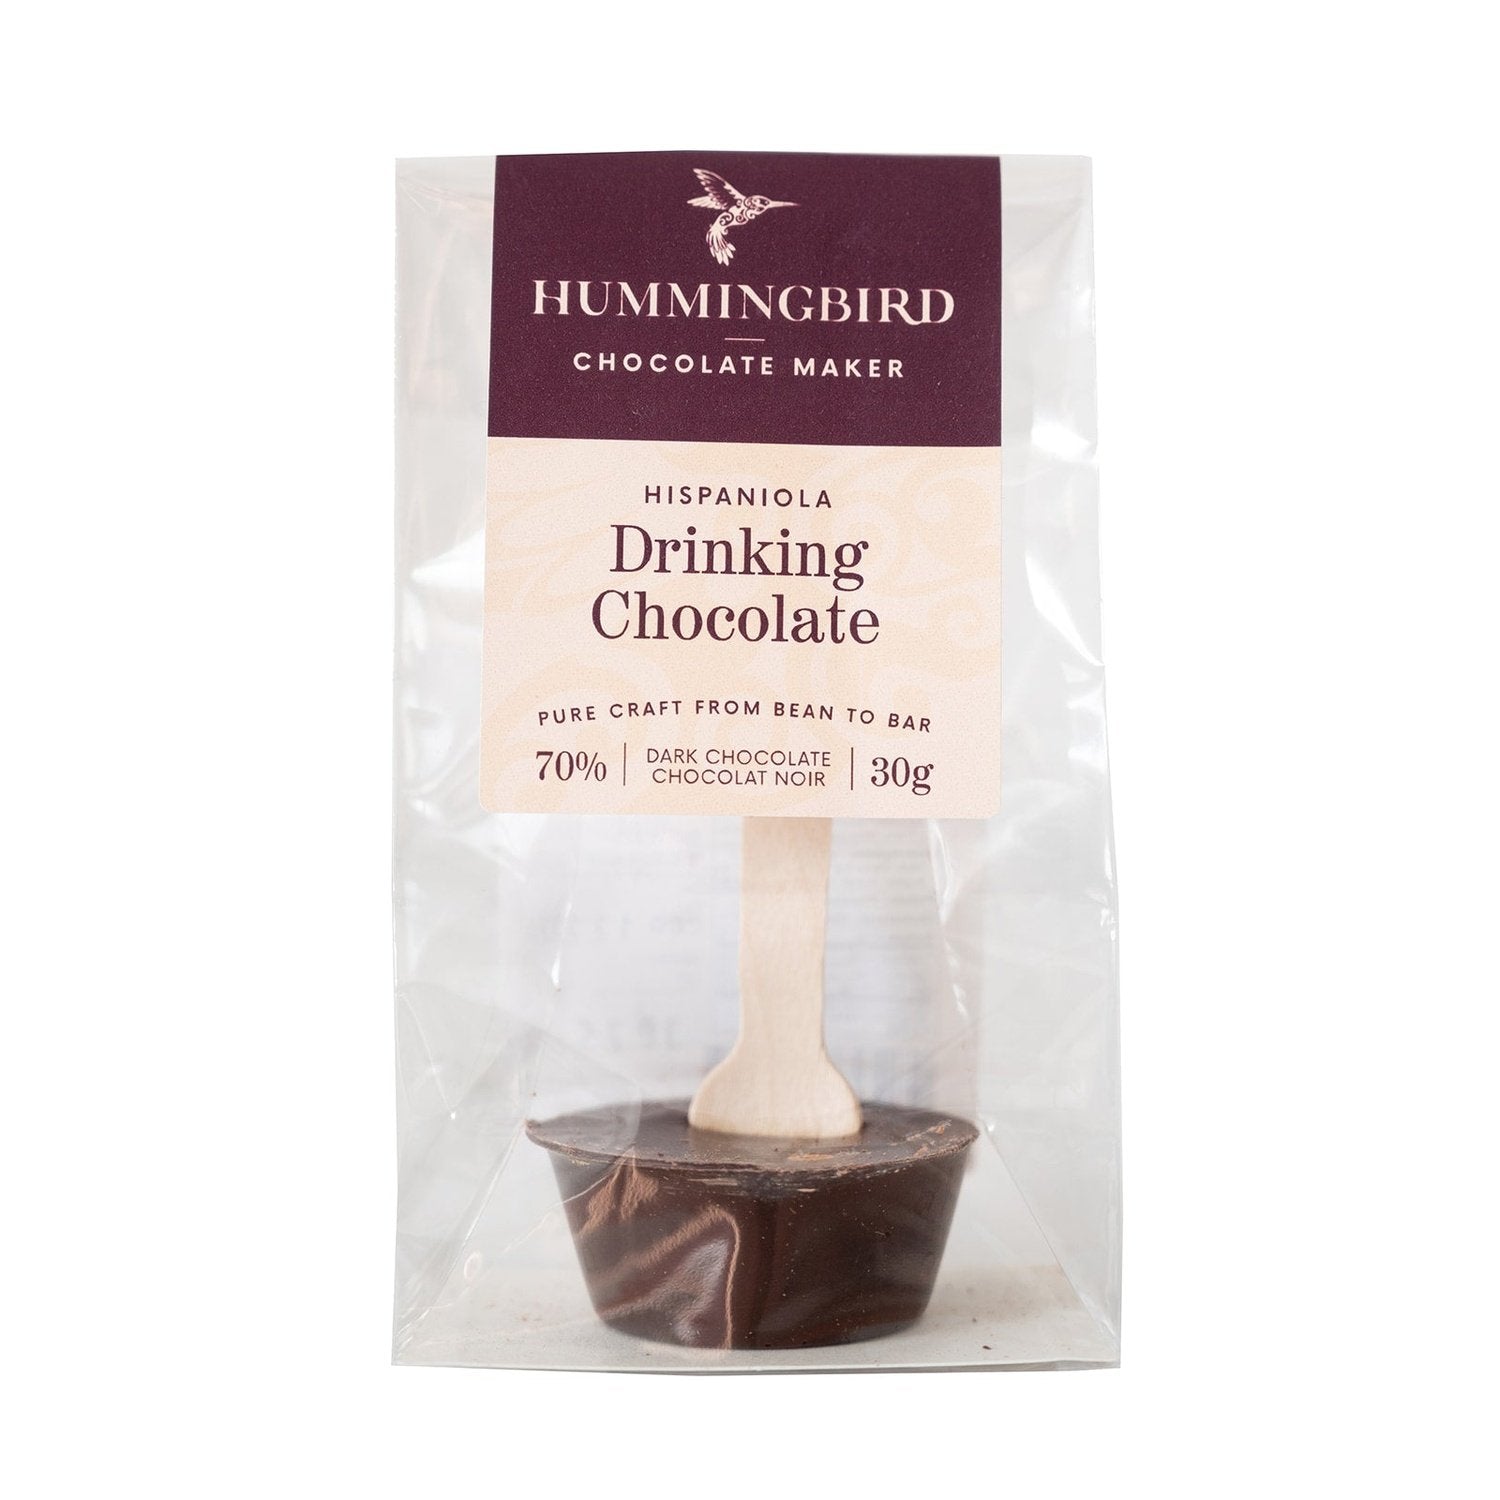 Hummingbird Chocolate Maker Hispaniola Drinking Chocolate